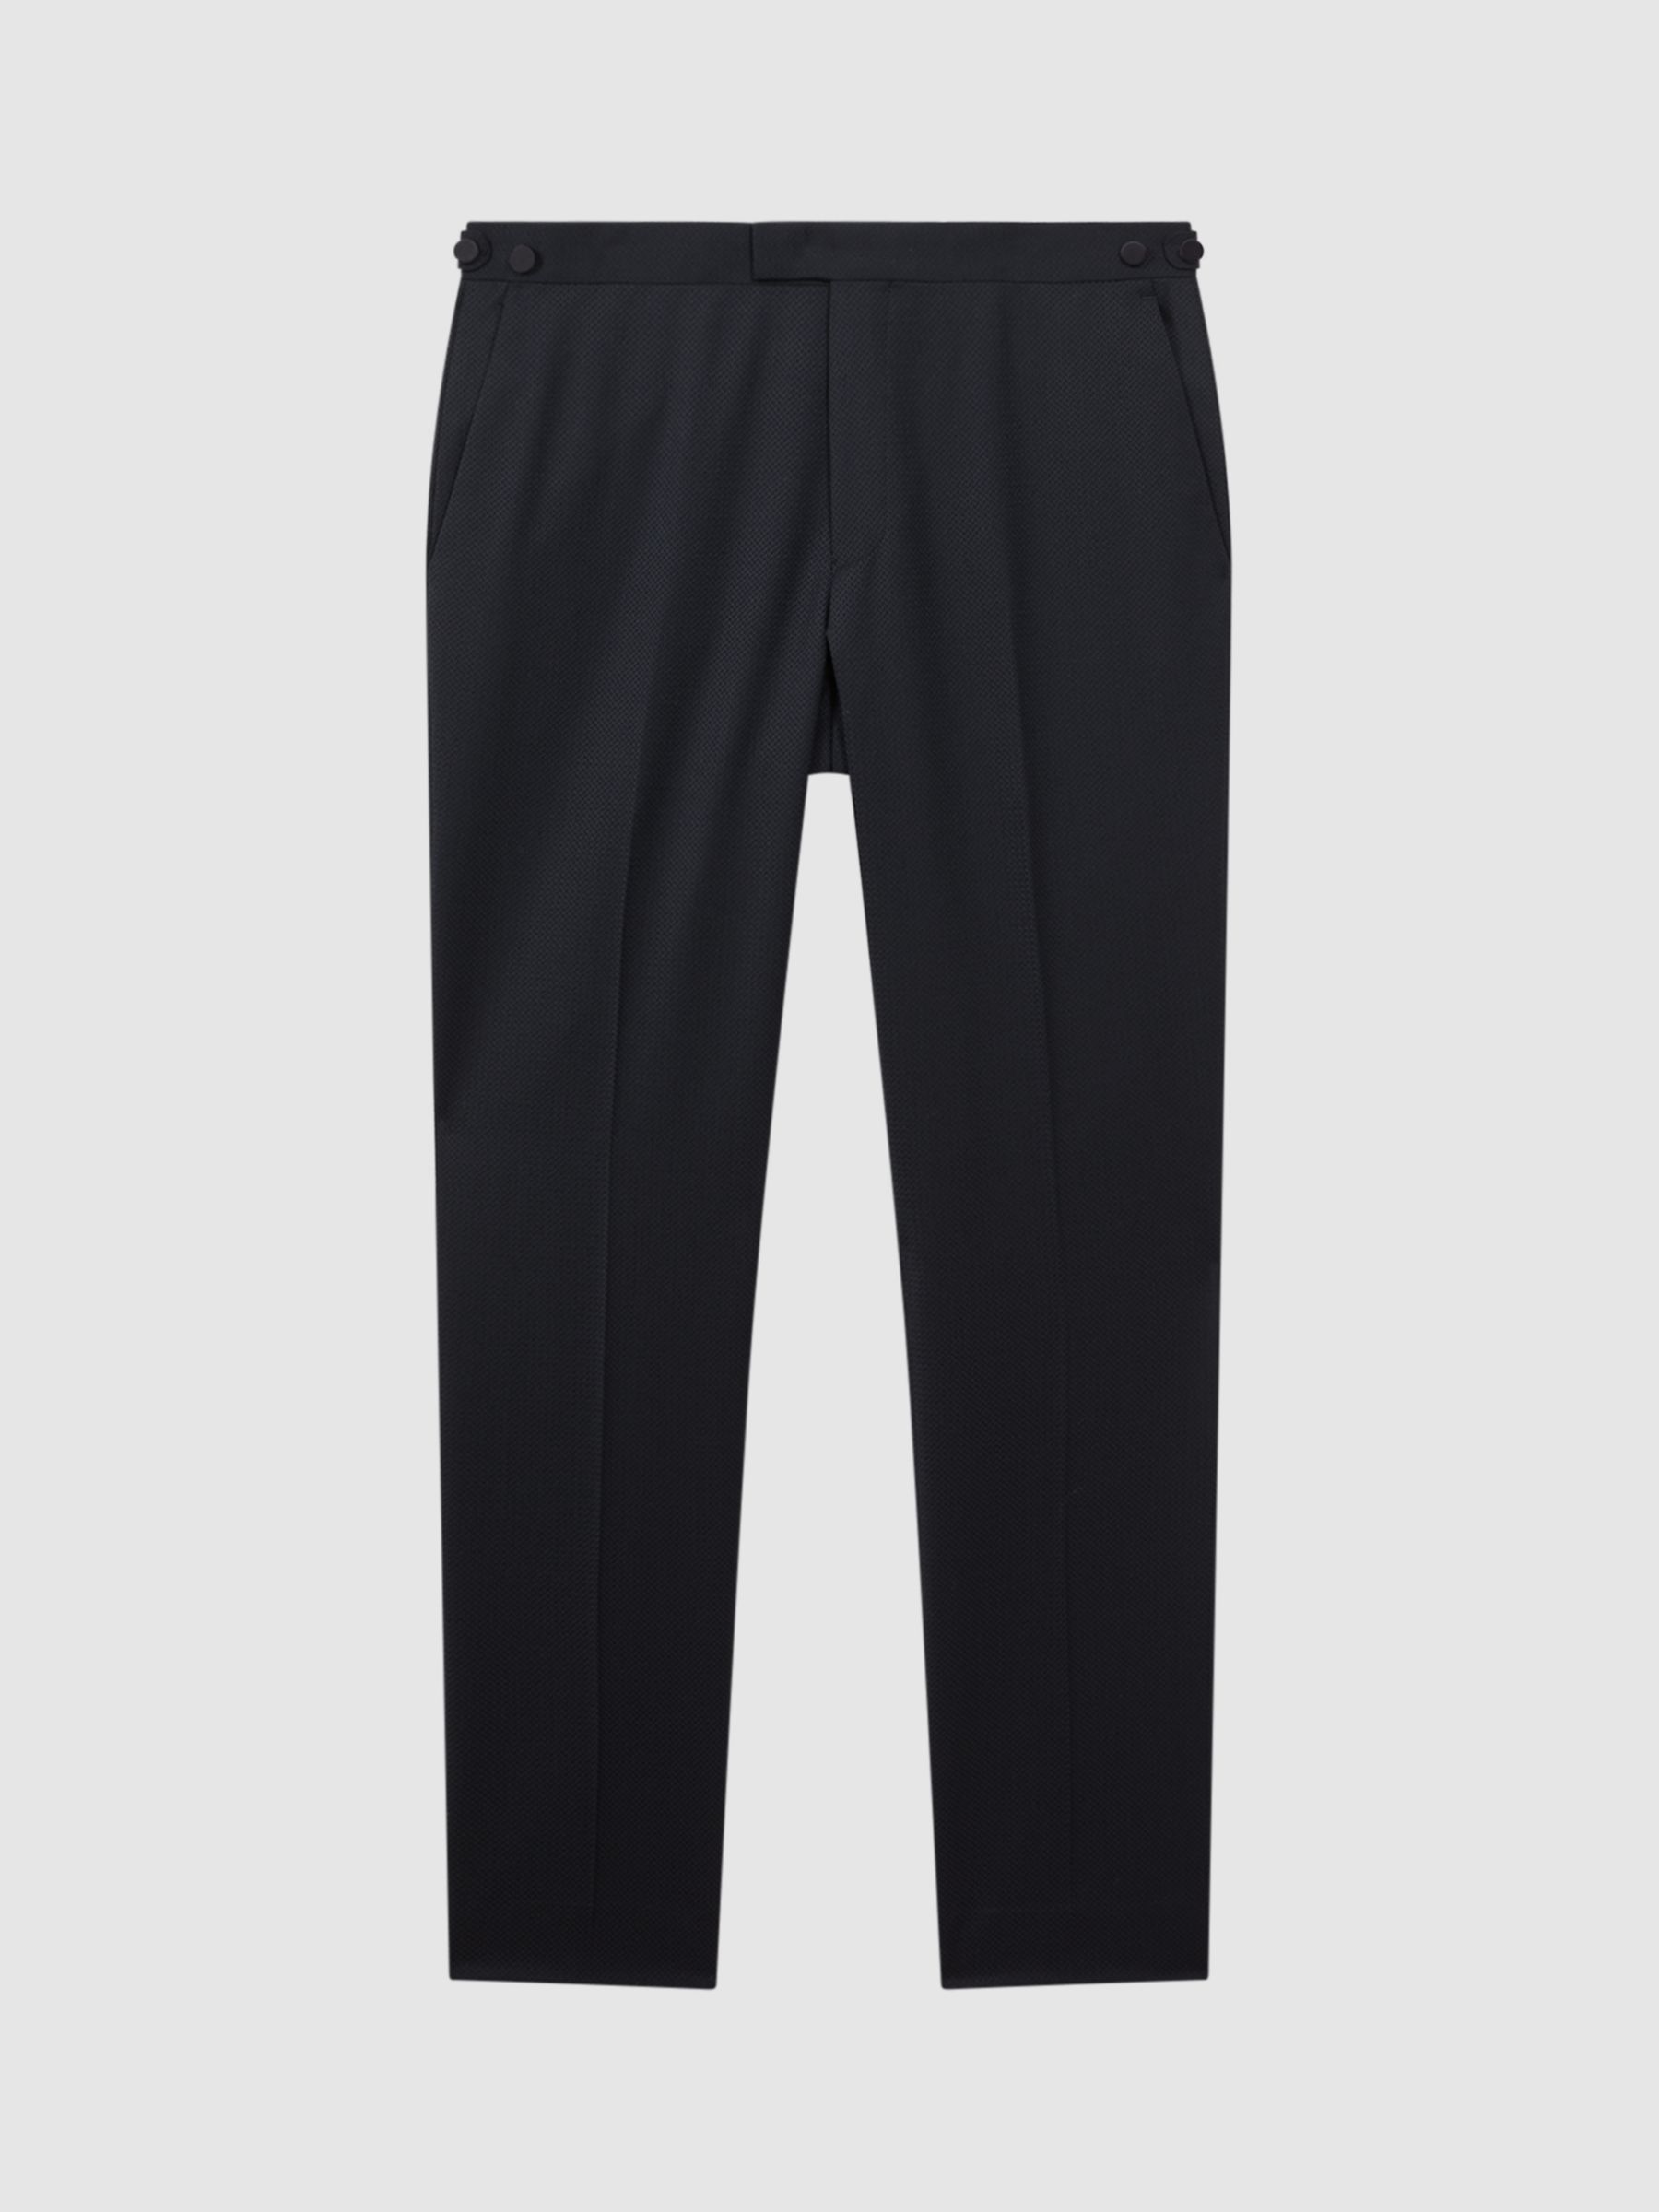 Reiss Deal Wool Blend Jacquard Suit Trousers, Navy, 30R